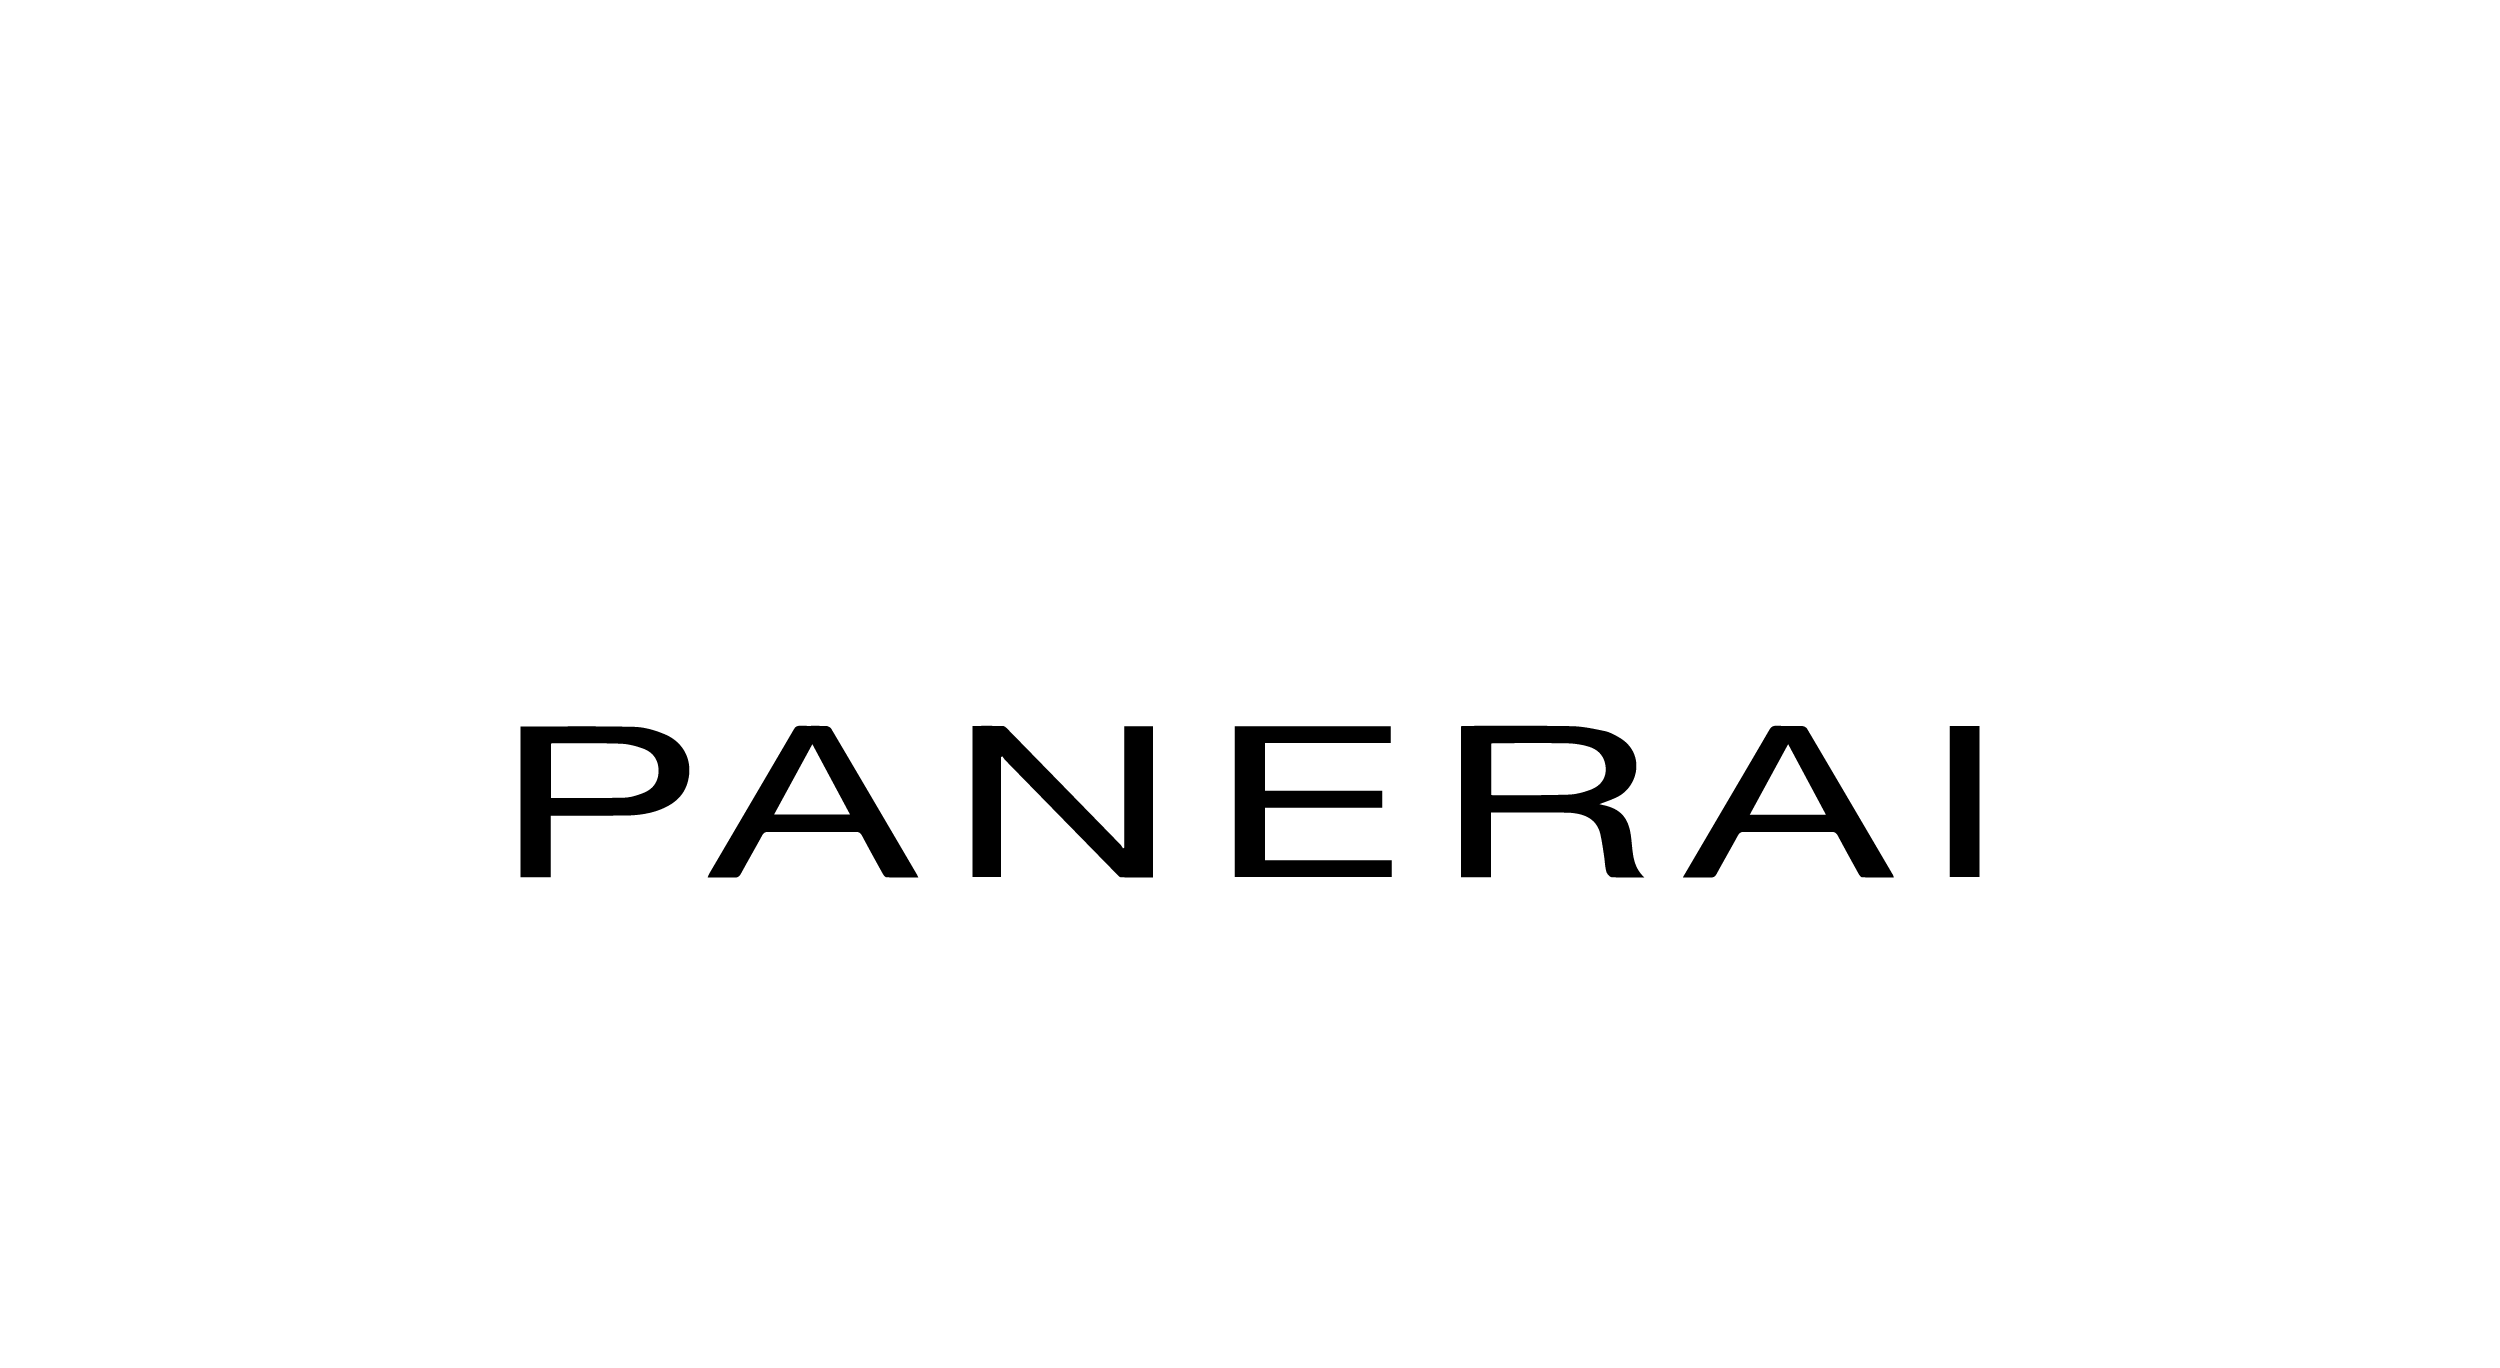 Panerai logo